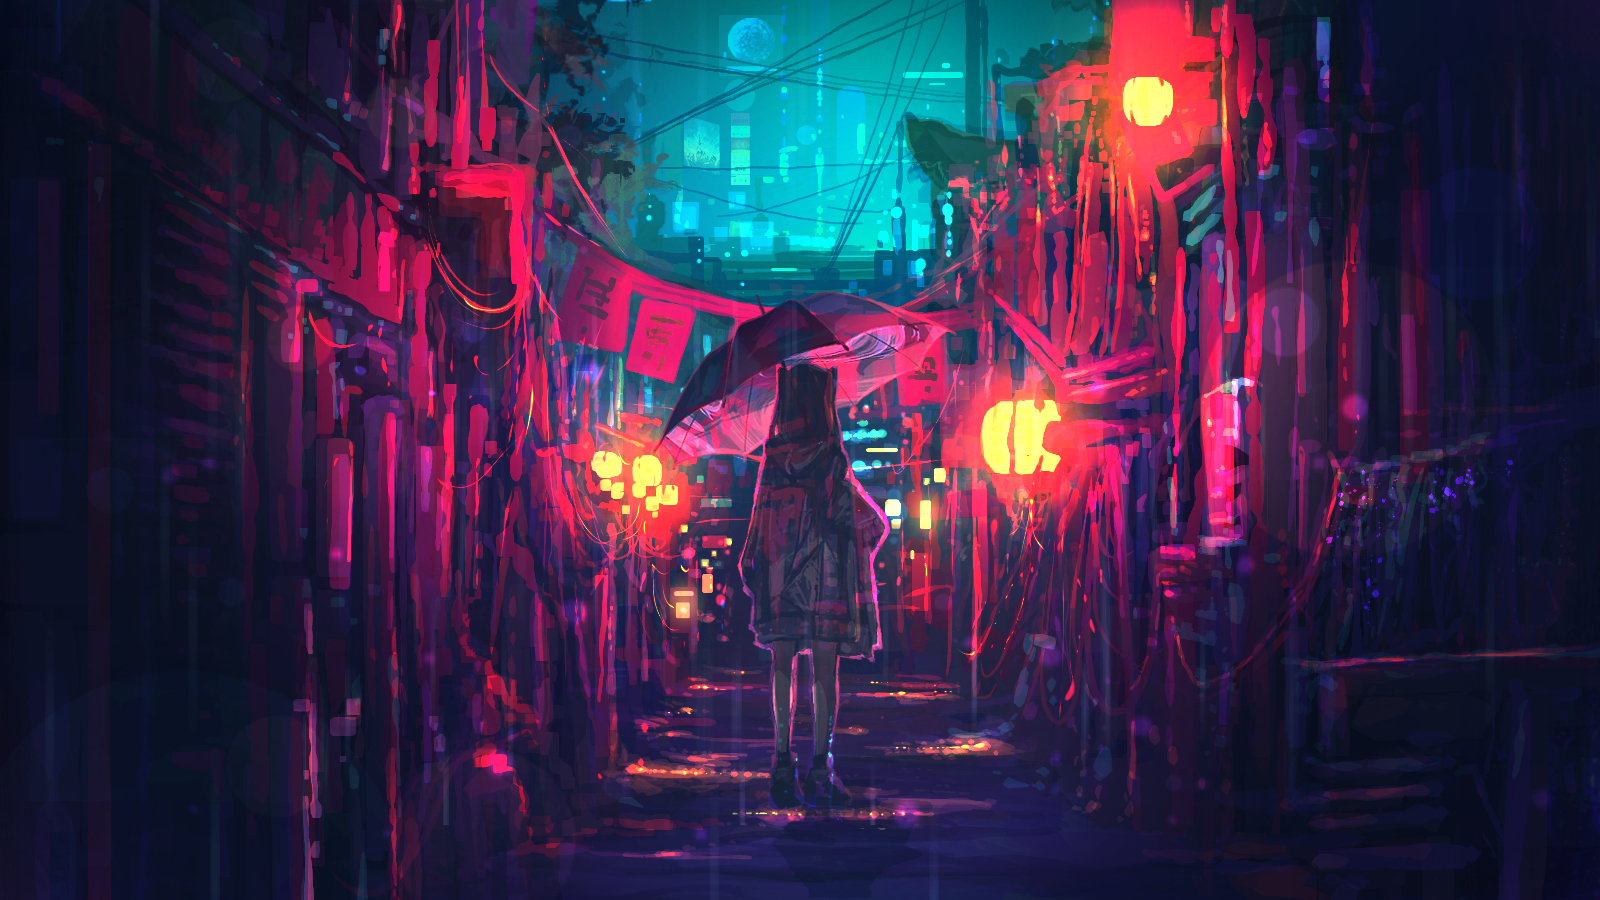 Anime 1600x900 anime anime girls digital art umbrella standing street light alleyway power lines night